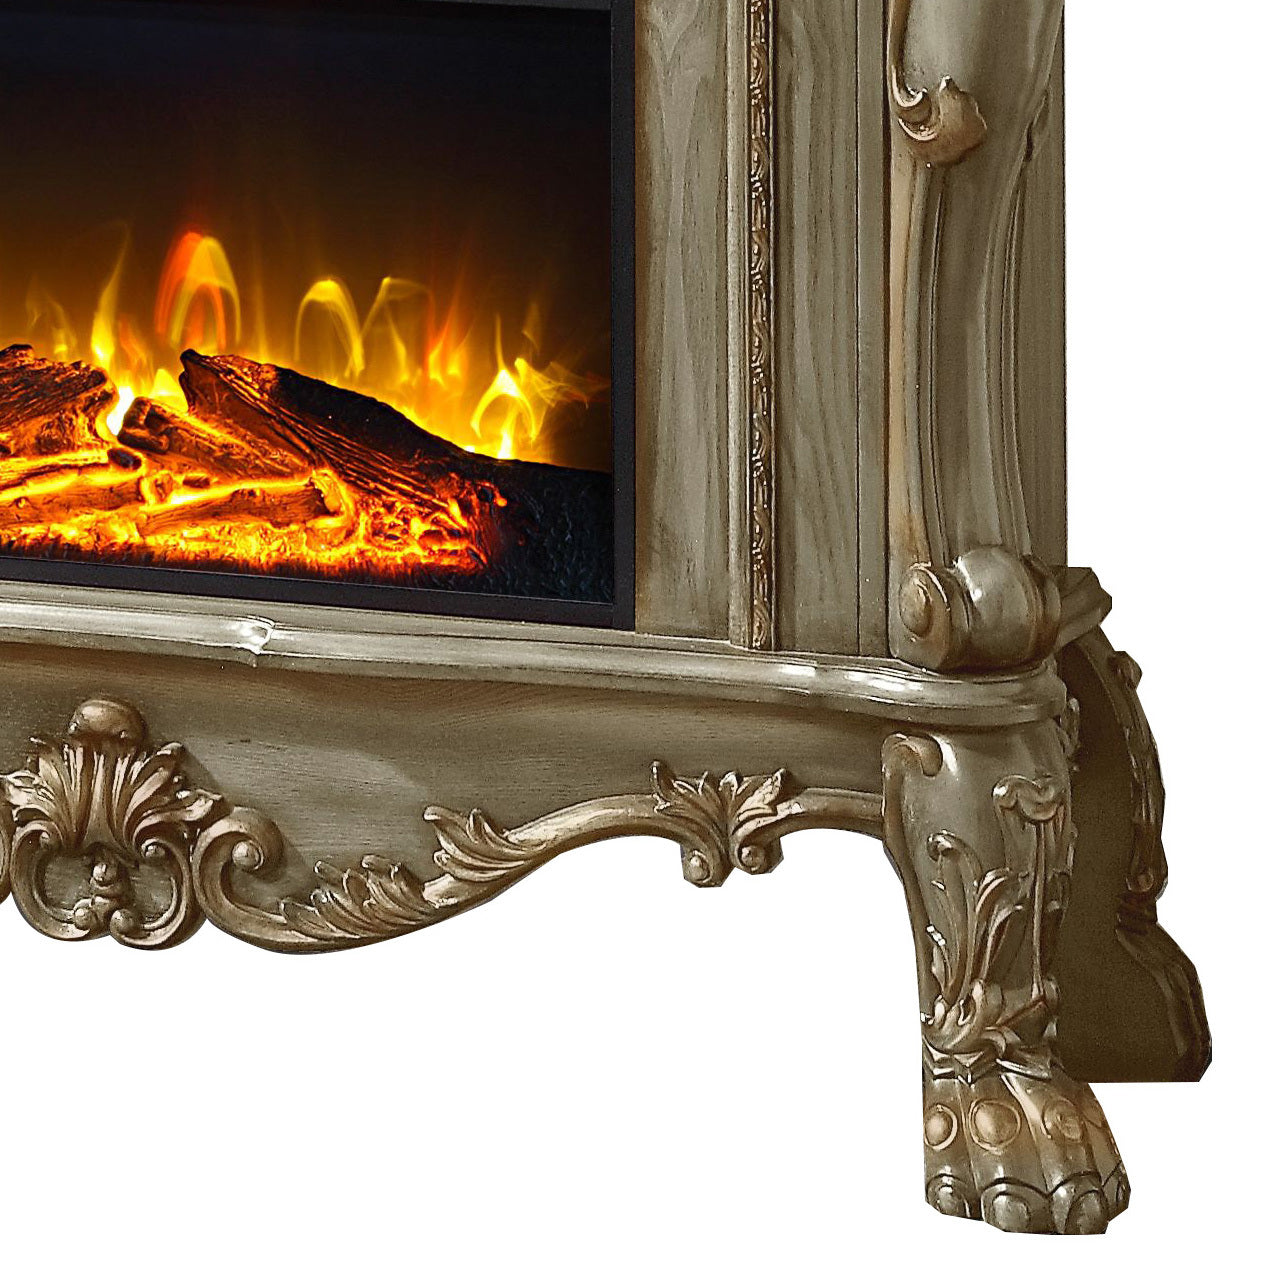 Acme Dresden Fireplace Gold Patina Finish Ac01308